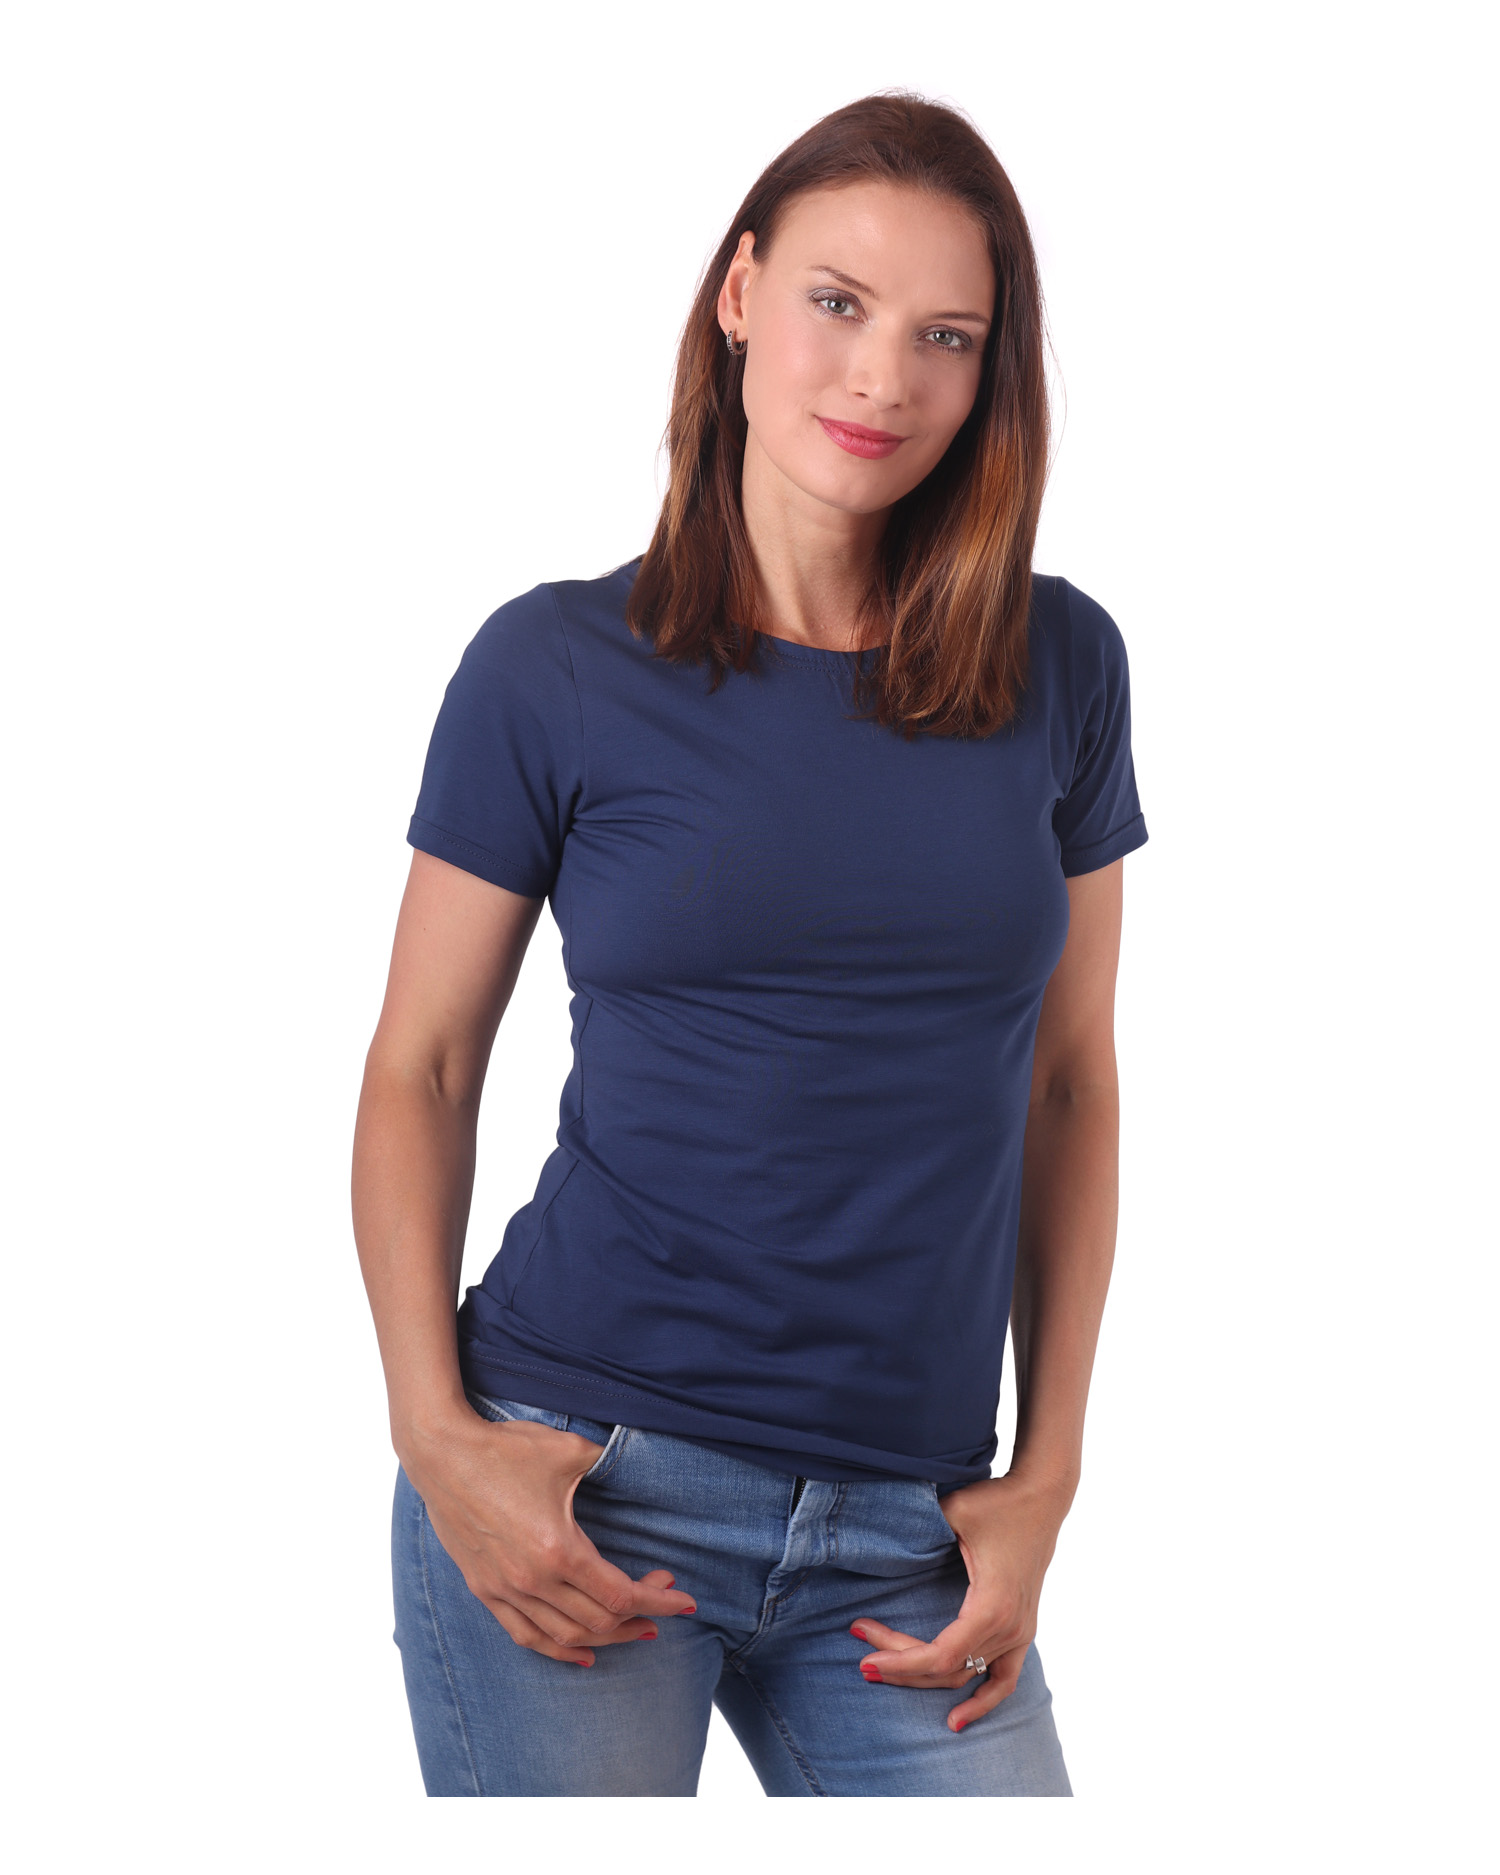 Dámske tričko Natália, krátky rukáv, jeans modré